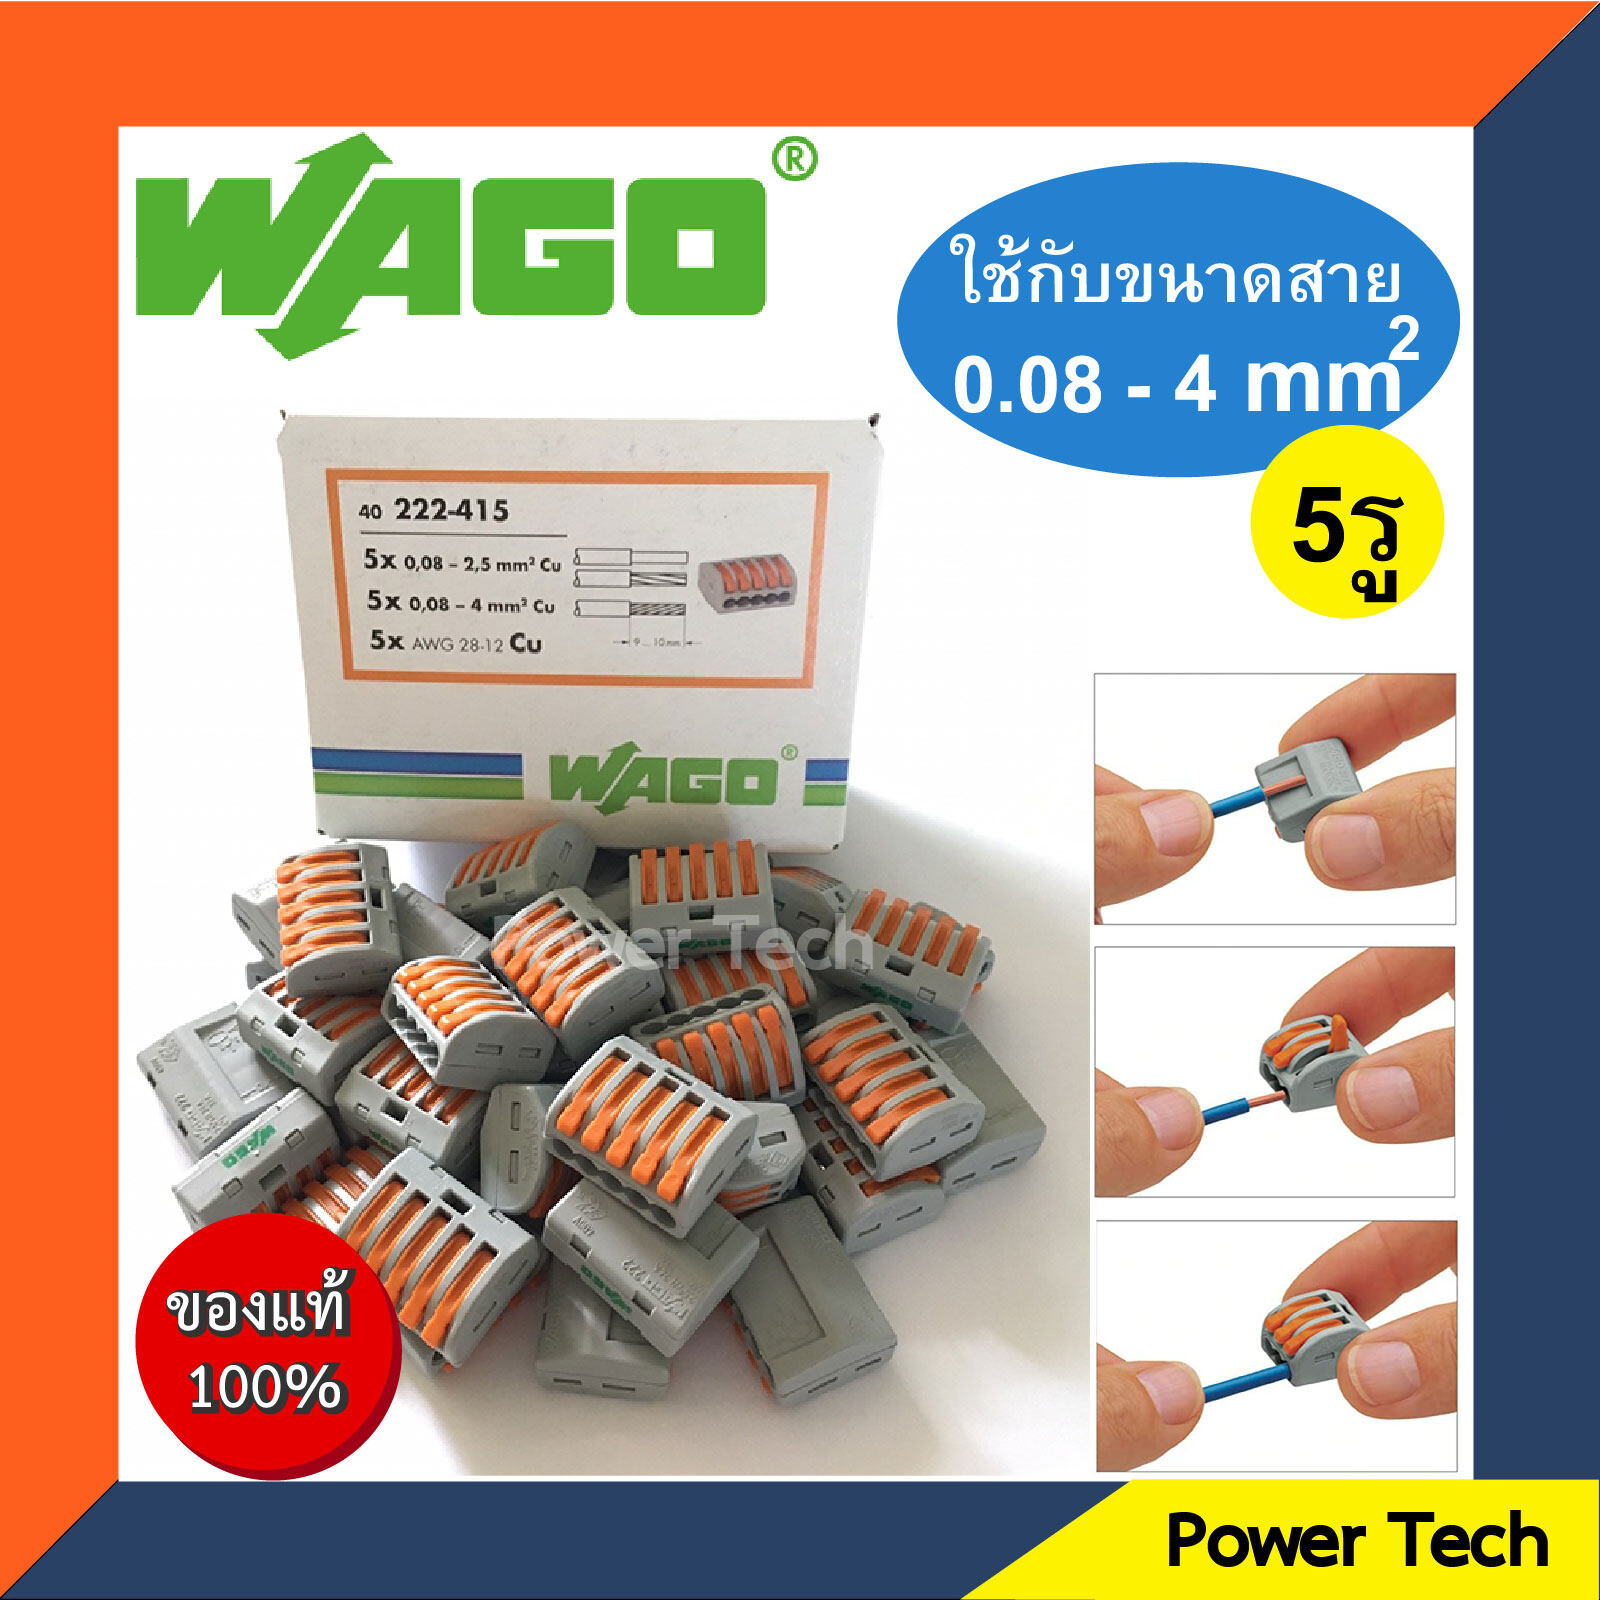 Wago วาโก้ ตัวต่อ ข้อต่อ เชื่อมสายไฟ แบบ 5 ช่อง เชื่อมต่อ - สีเทา  connectors 222 - 415 สี 4 แพ็ค / 1 กล่อง สี 4 แพ็ค / 1 กล่อง